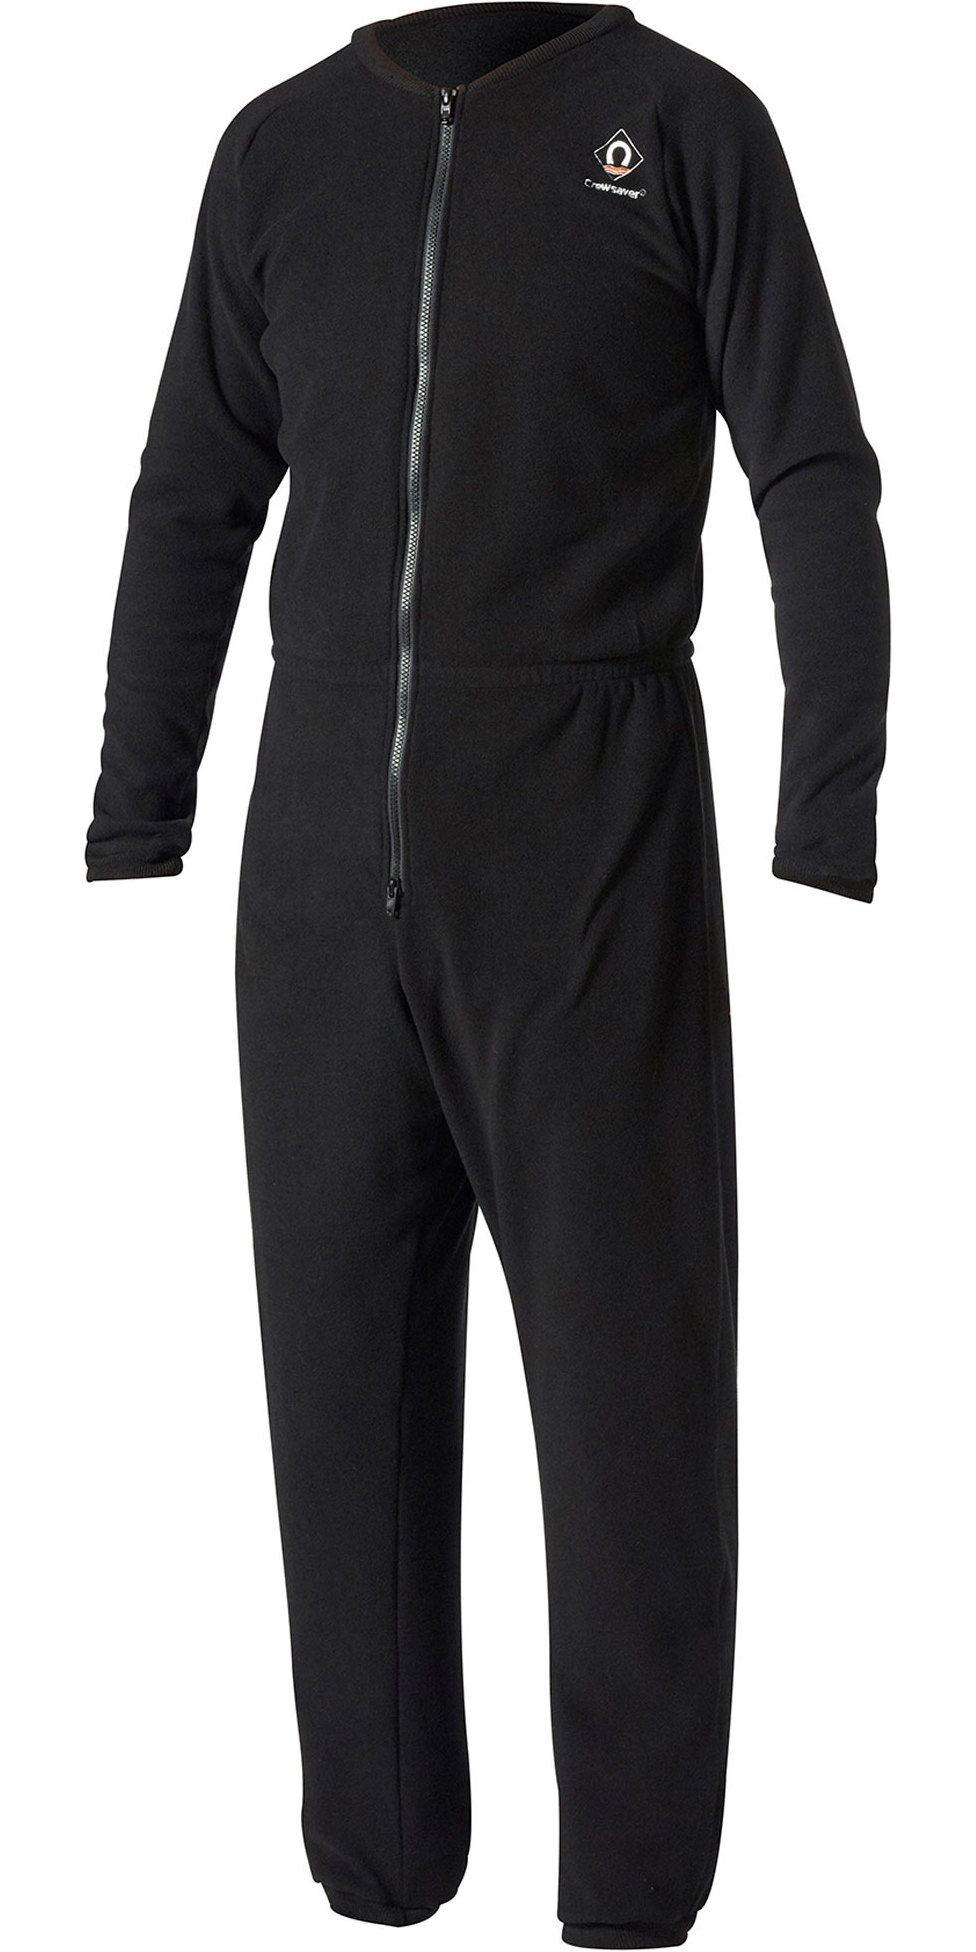 Unisex Waterproof & Breathable Atacama Pro Drysuit Dry Suit Including Undersuit Black Crewsaver Boating and Sailing 